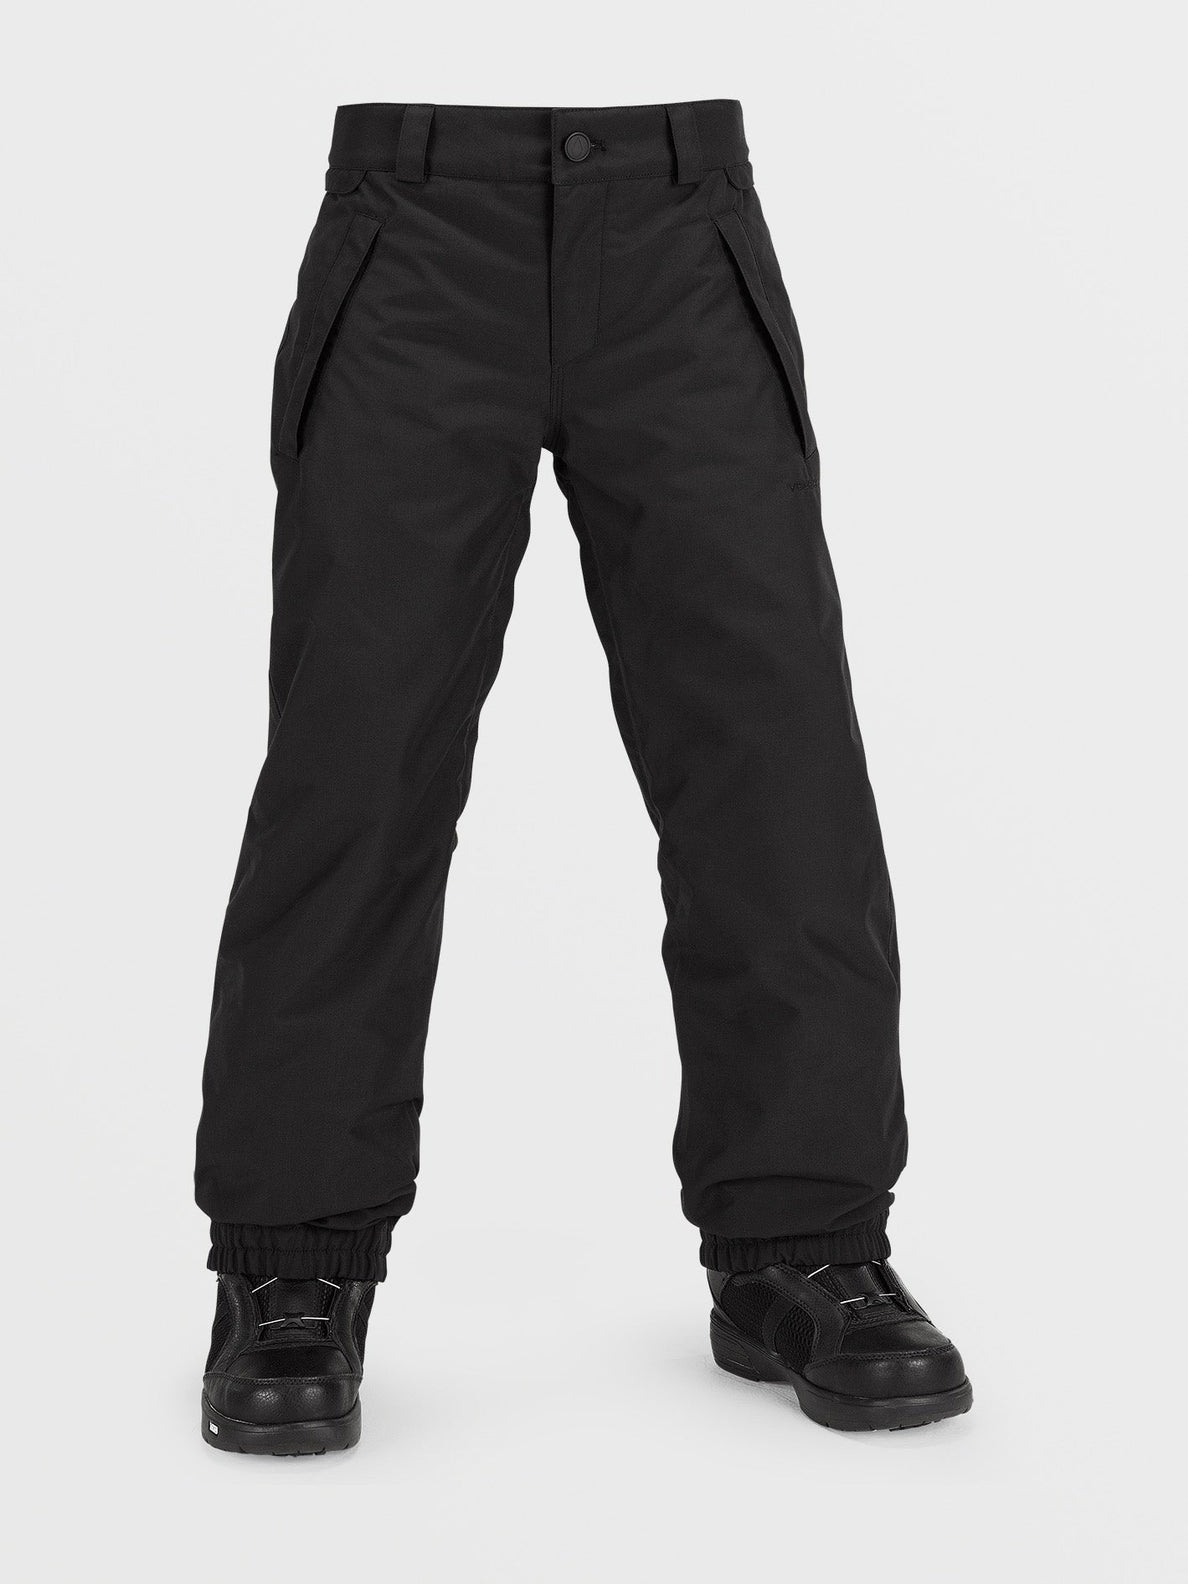 Fernie Insulated Trousers - BLACK - (KIDS) (I1252401_BLK) [F]